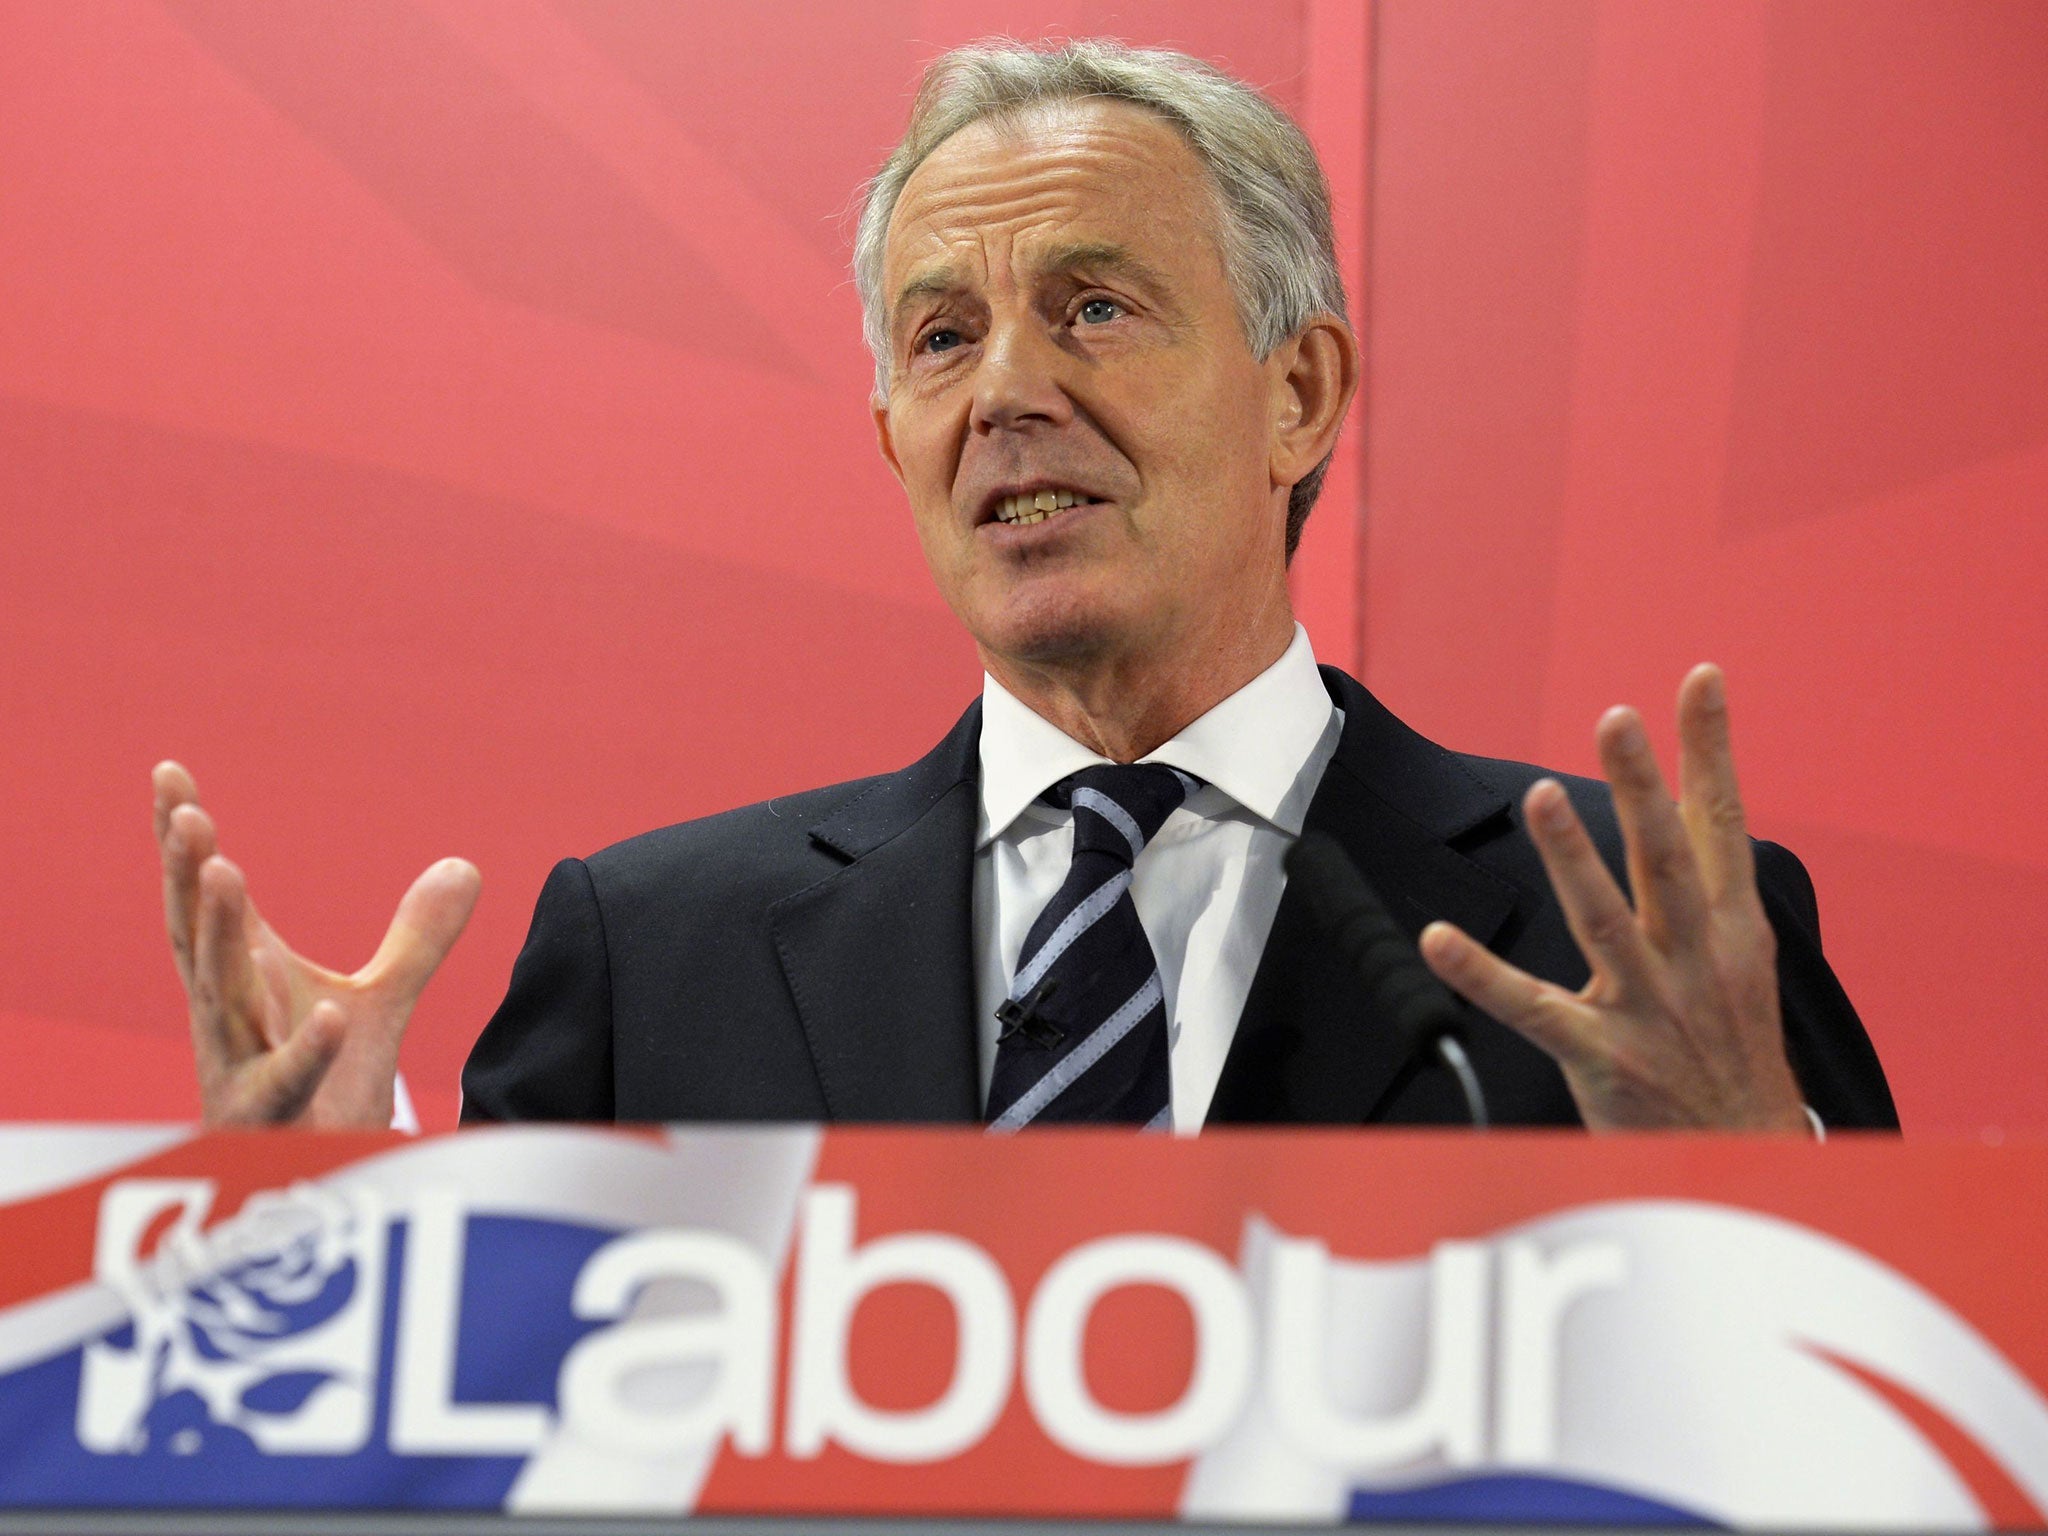 Tony Blair has warned that Labour faces 'annihilation' under Jeremy Corbyn